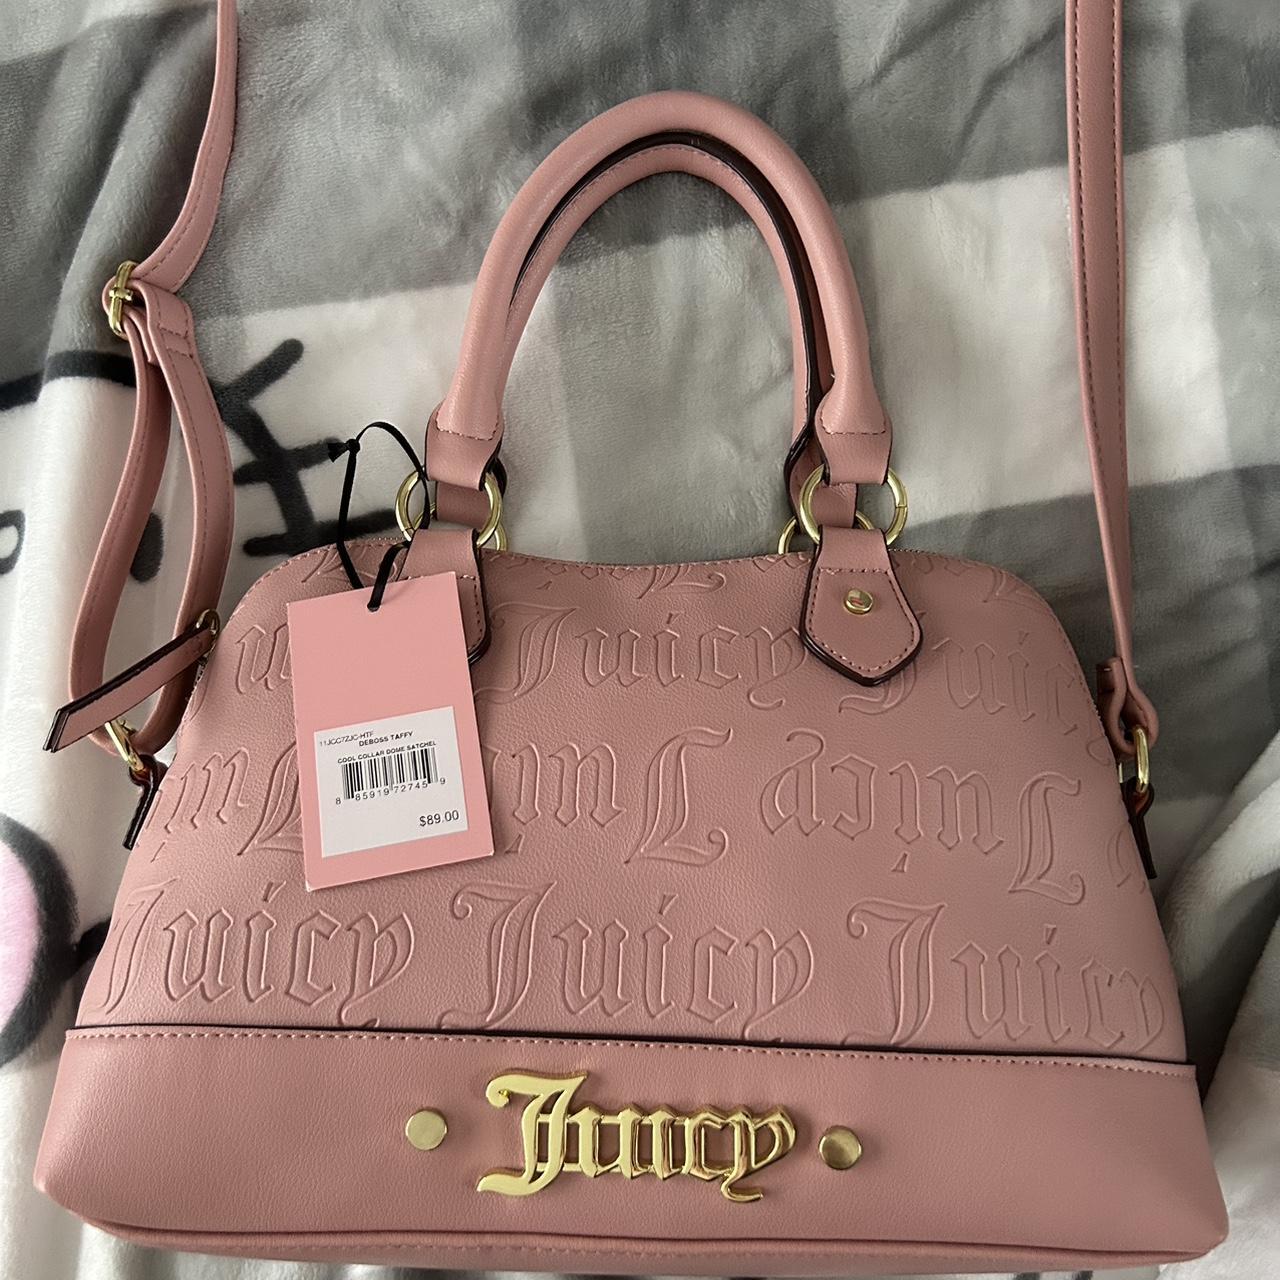 Bucket bag big size handbag for women pink cute bag for daily use woman  purse bag